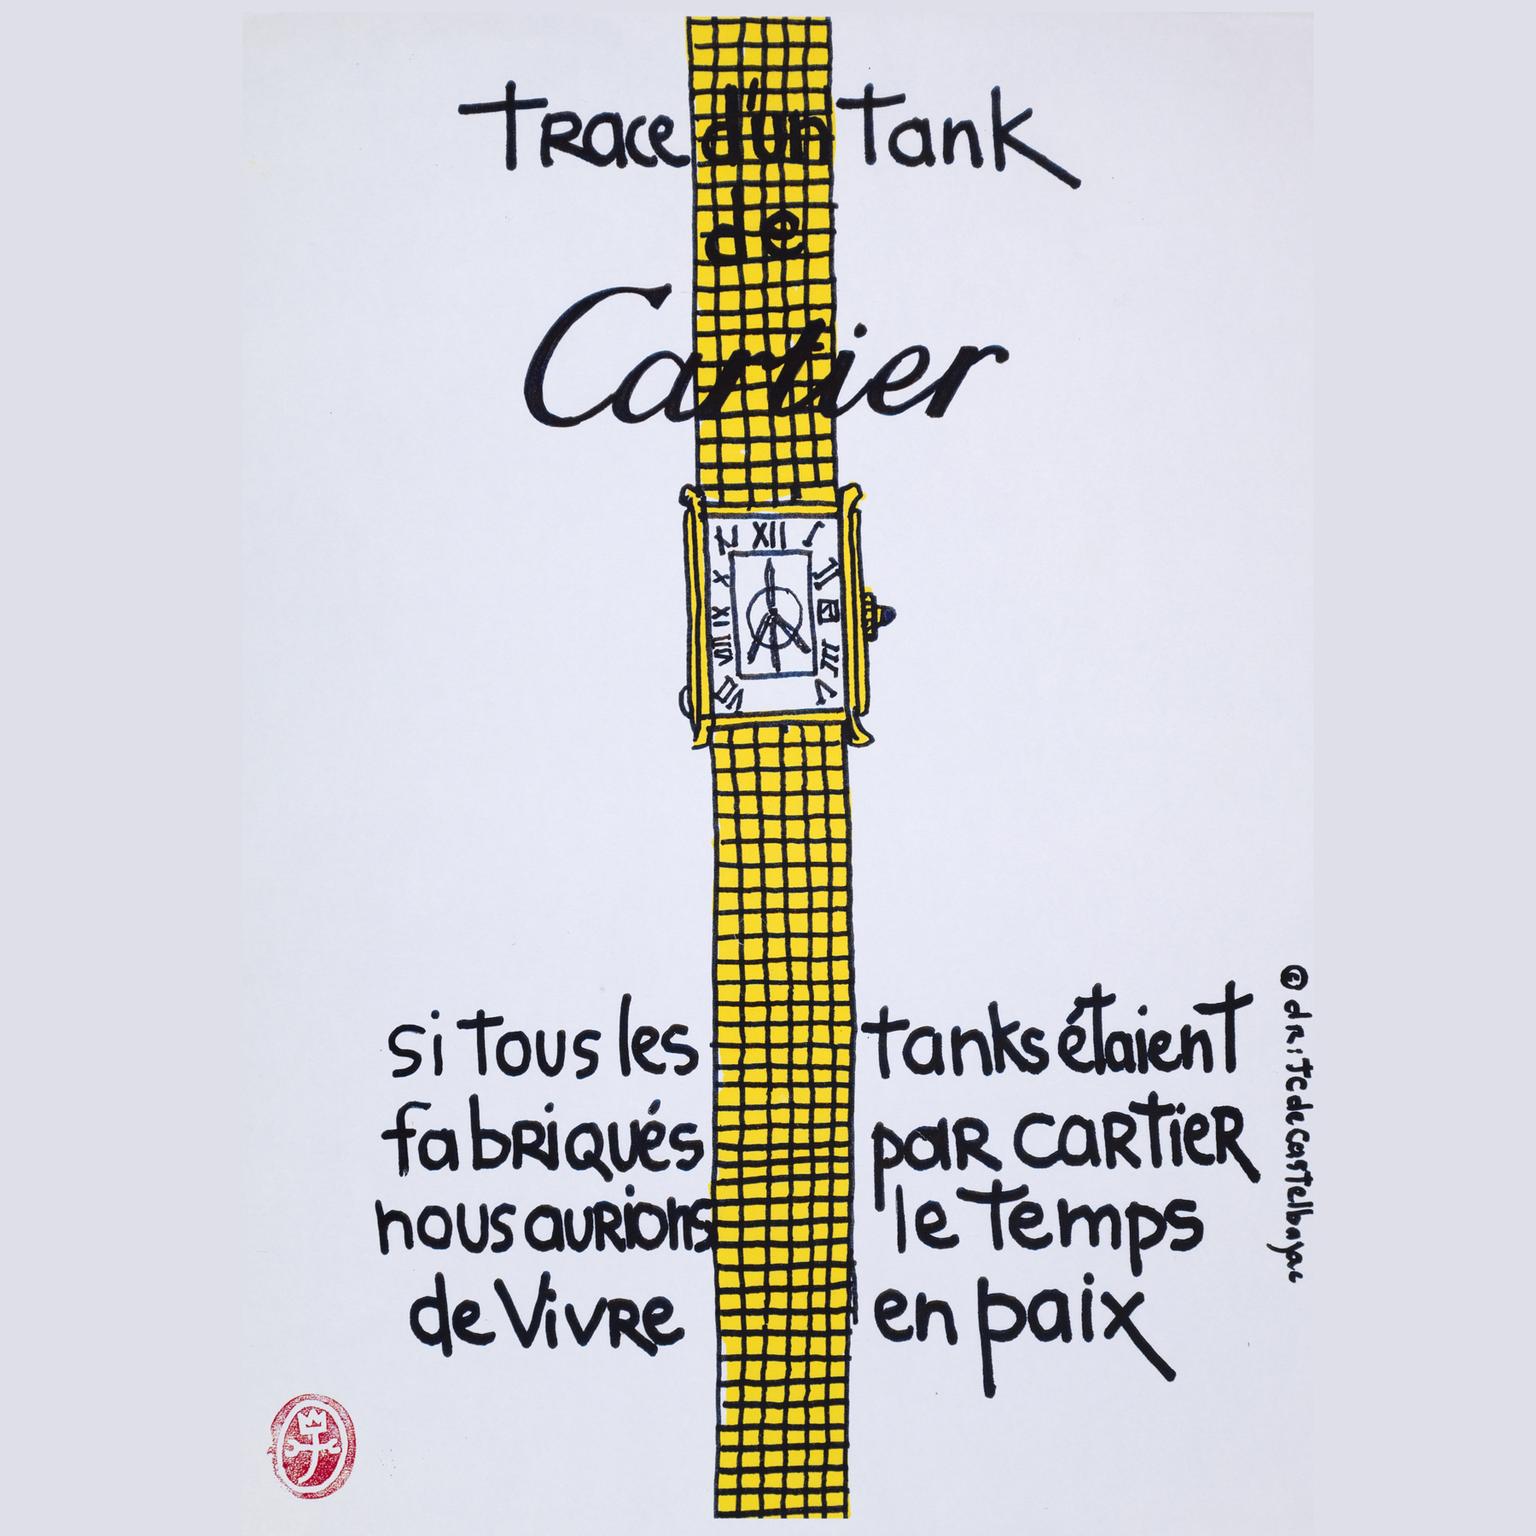 Cartier Tank poster by Jean-Charles, marquis de Castebajac